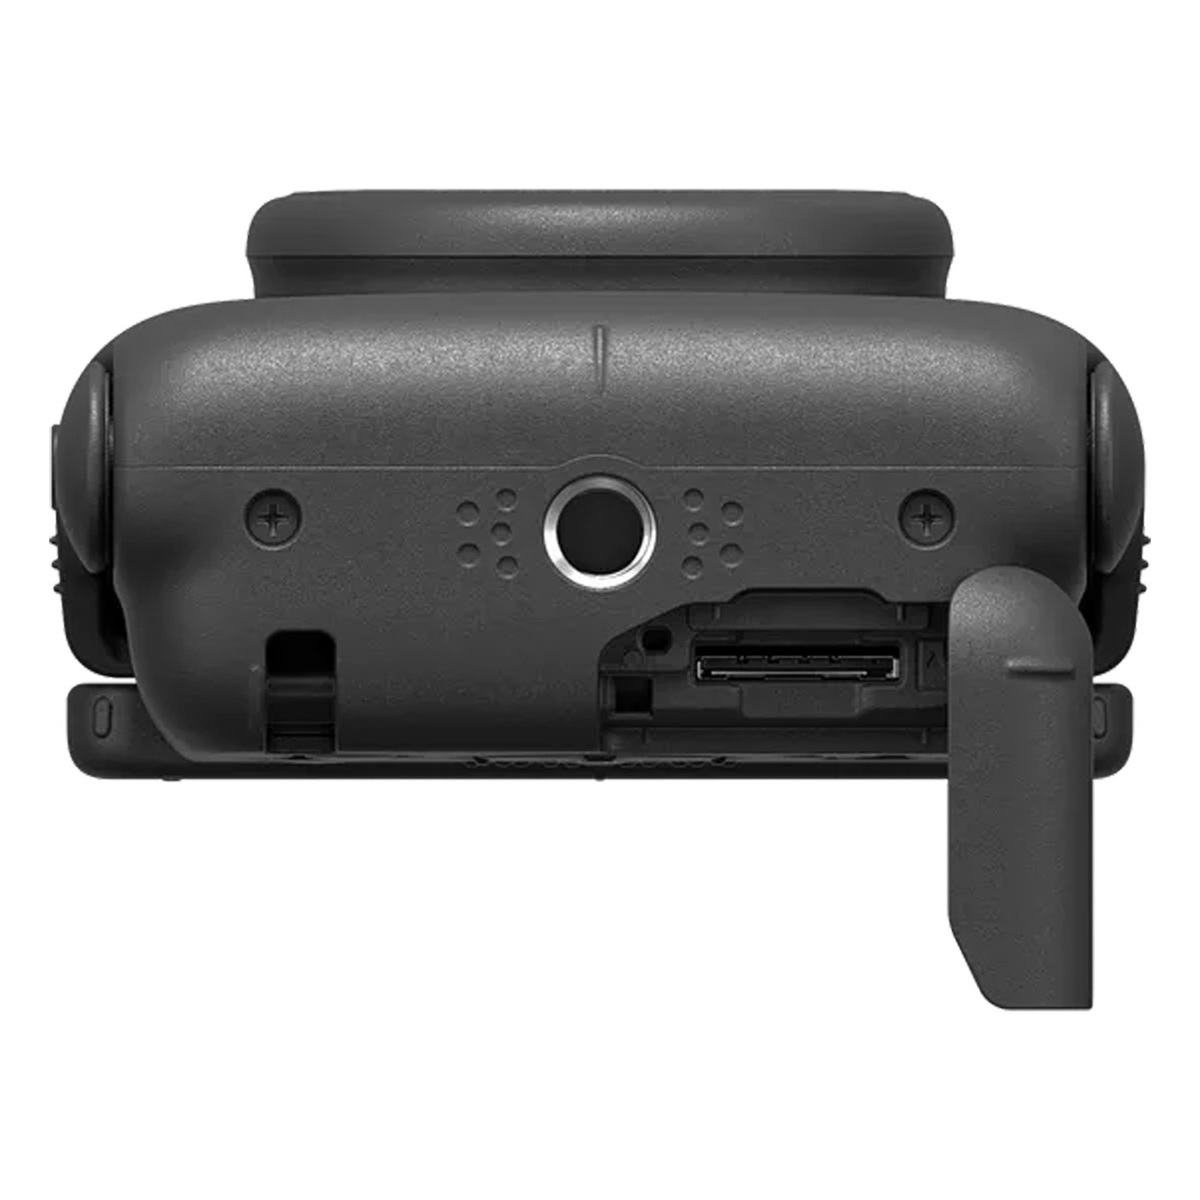 Canon Powershot V10 Compact Digital Camera, Black